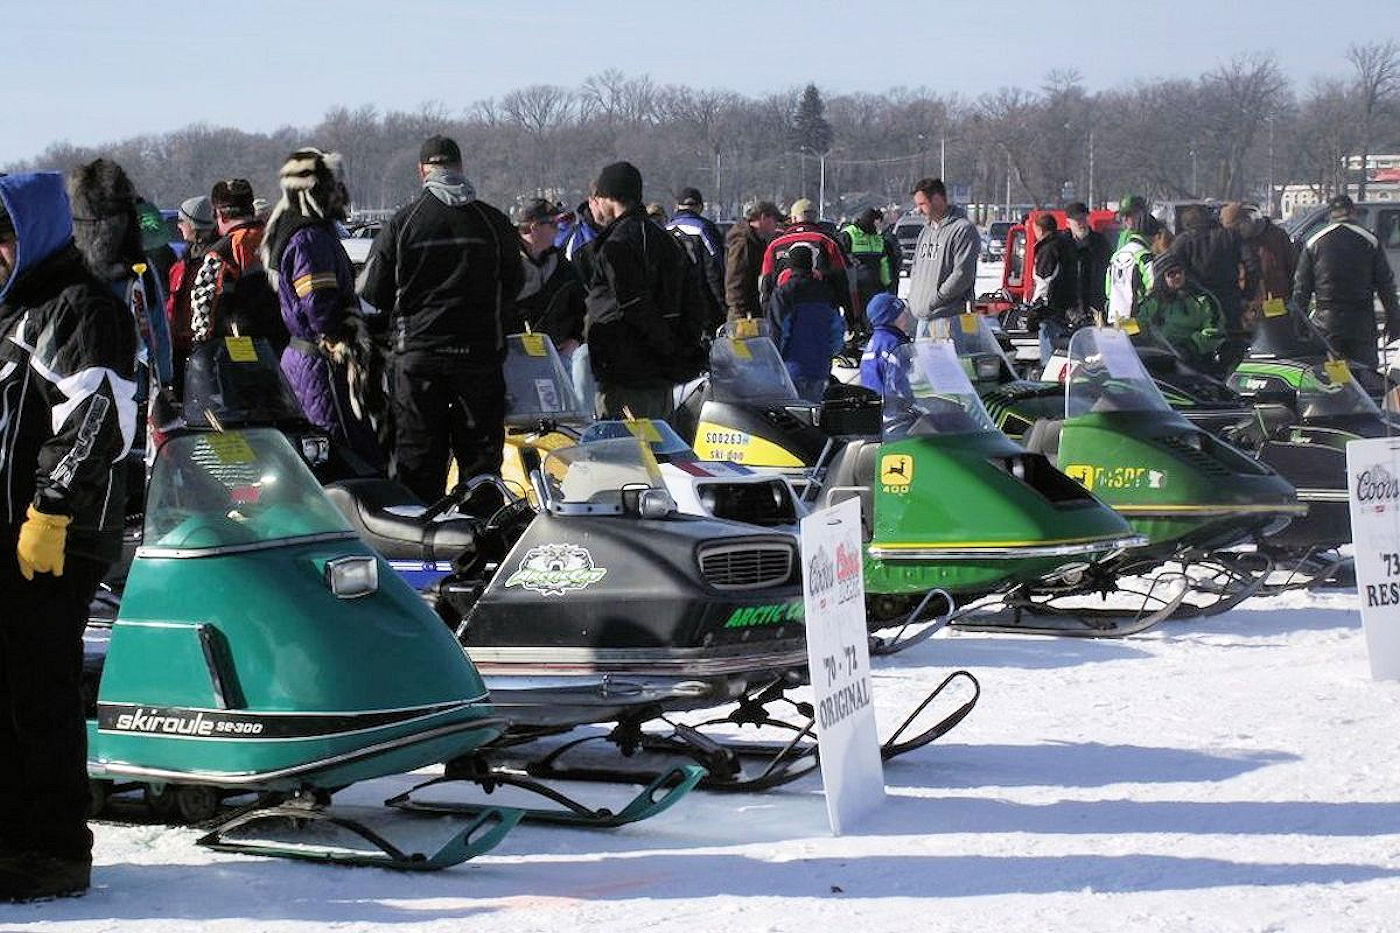 DL Vintage Snowmobile Rally/Swap Meet/Radar run - Detroit Lakes Polar Fest - The Lodge on Lake Detroit Events Guide